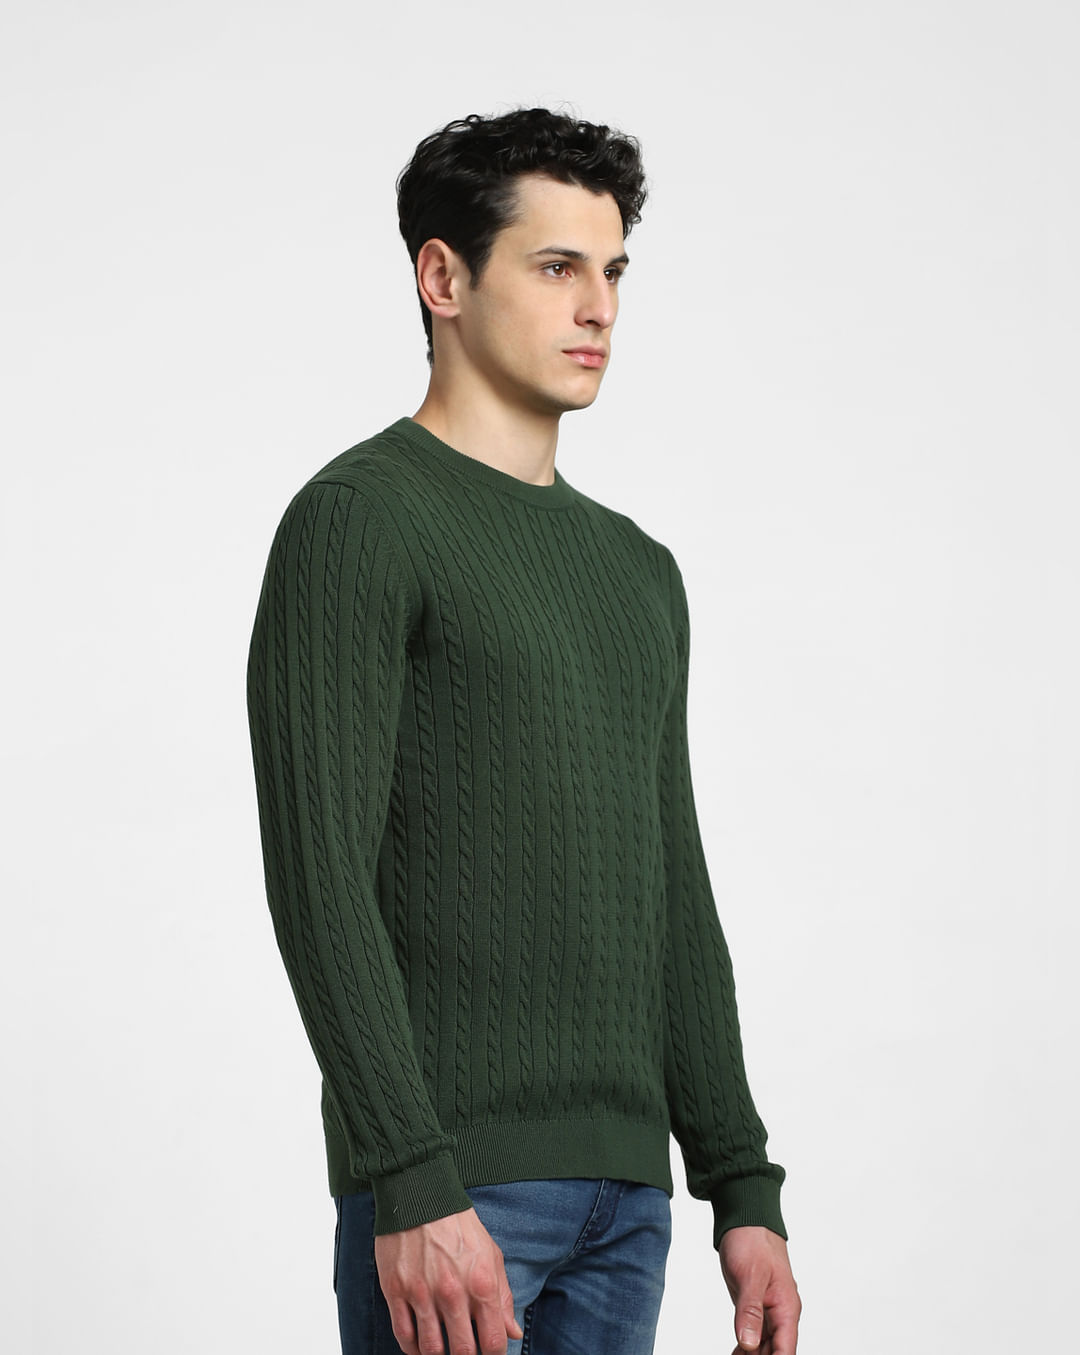 Dark Green Knitted Sweater